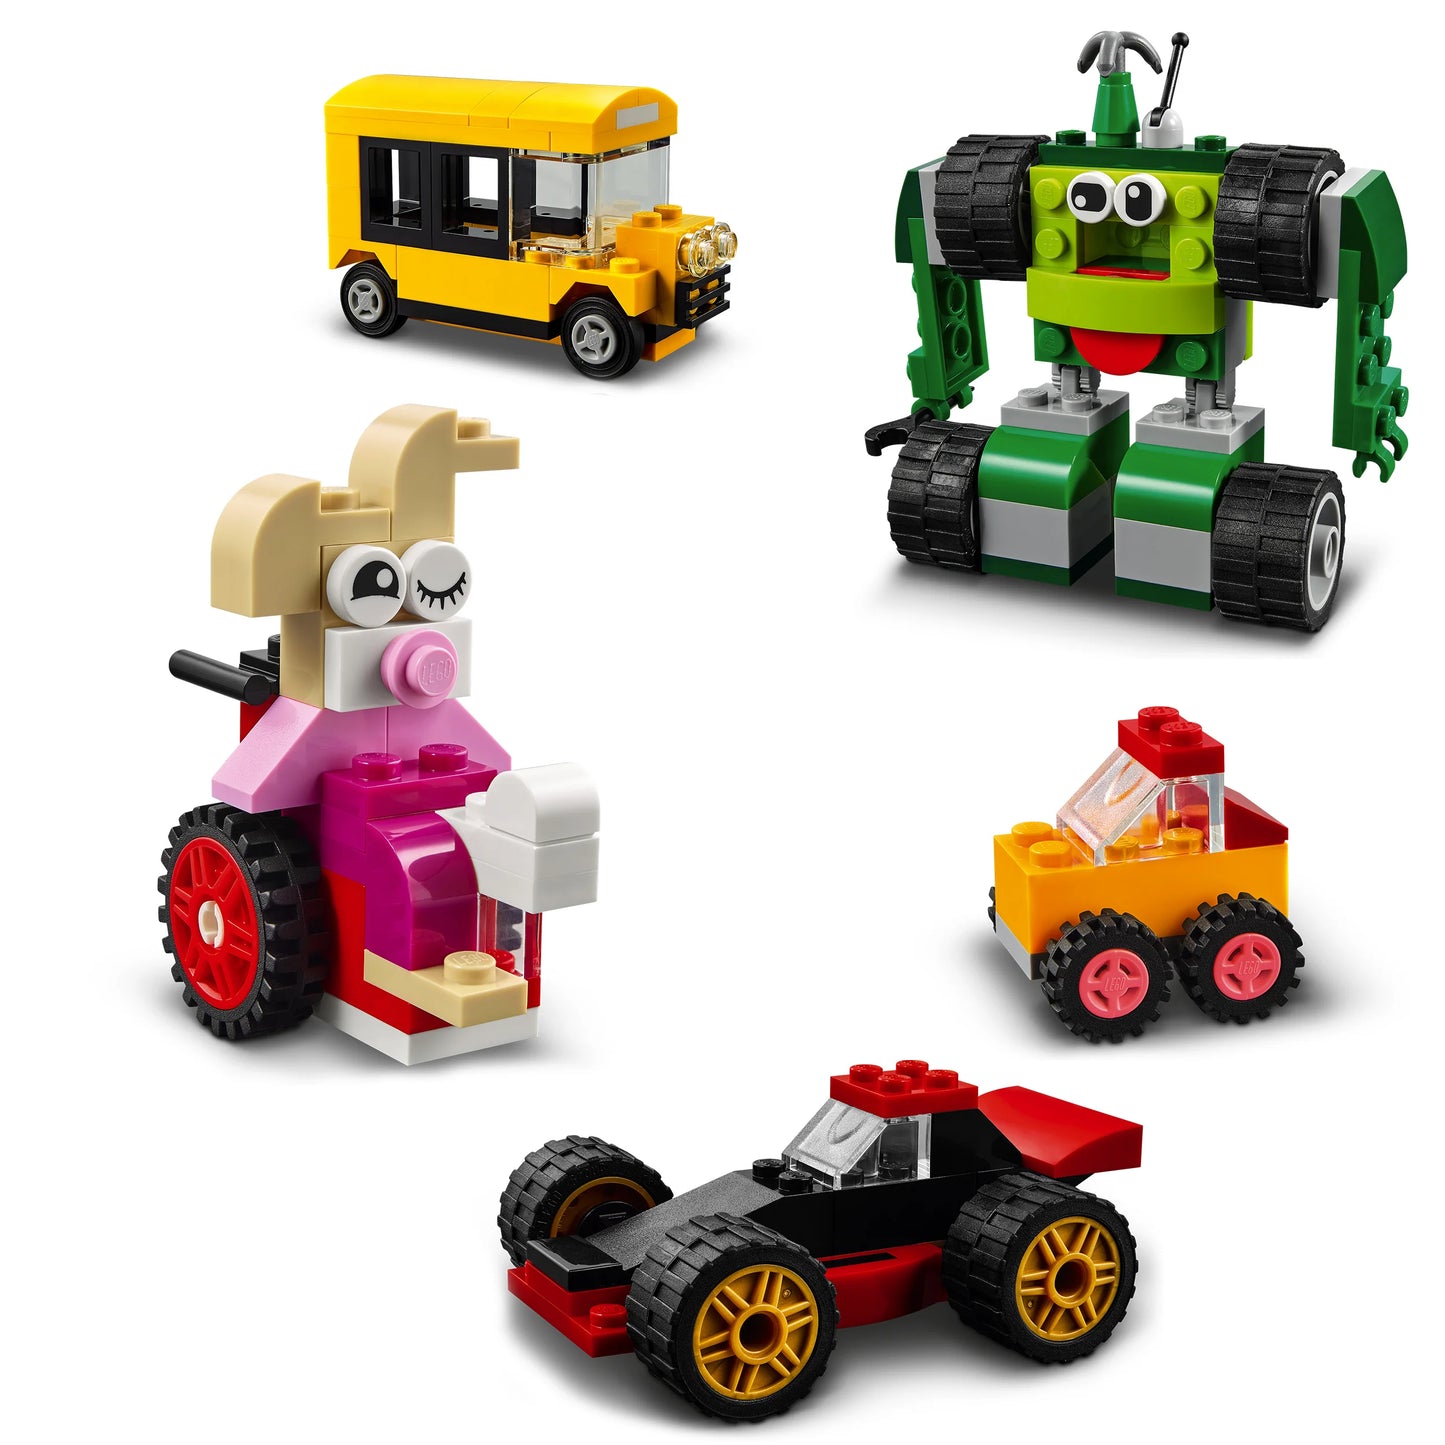 Bricks and Wheels - LEGO Classic